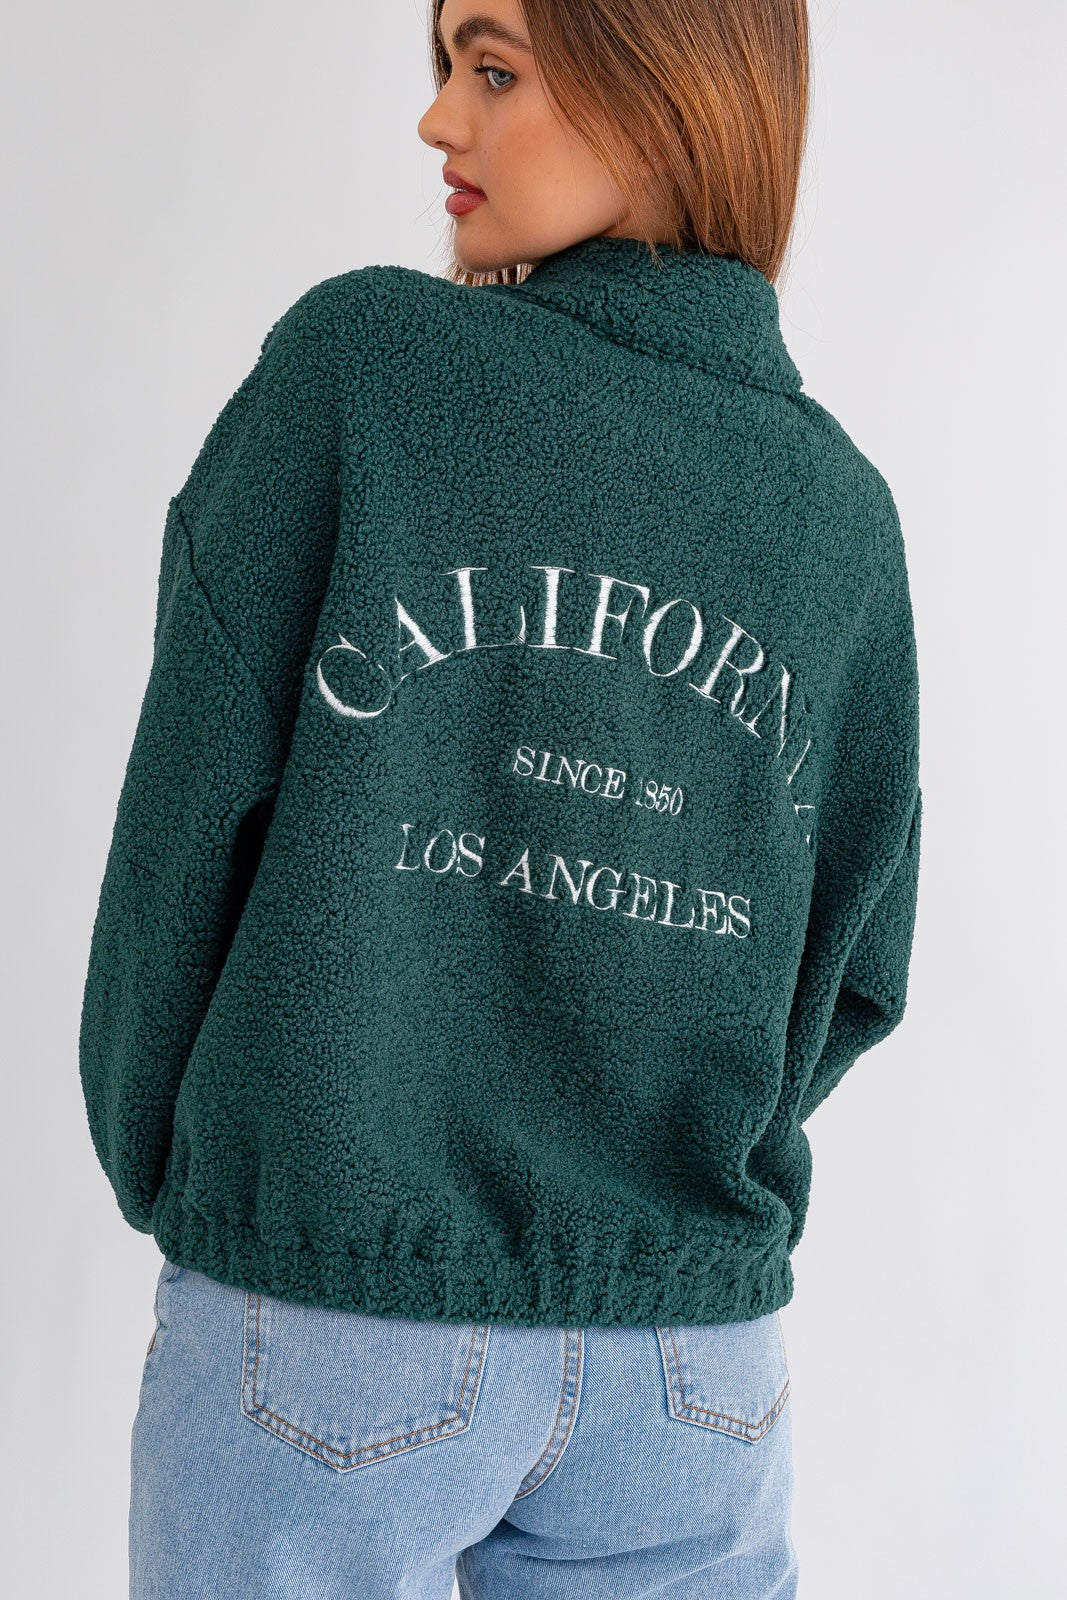 California Embroidered Quarter Zip Fleece